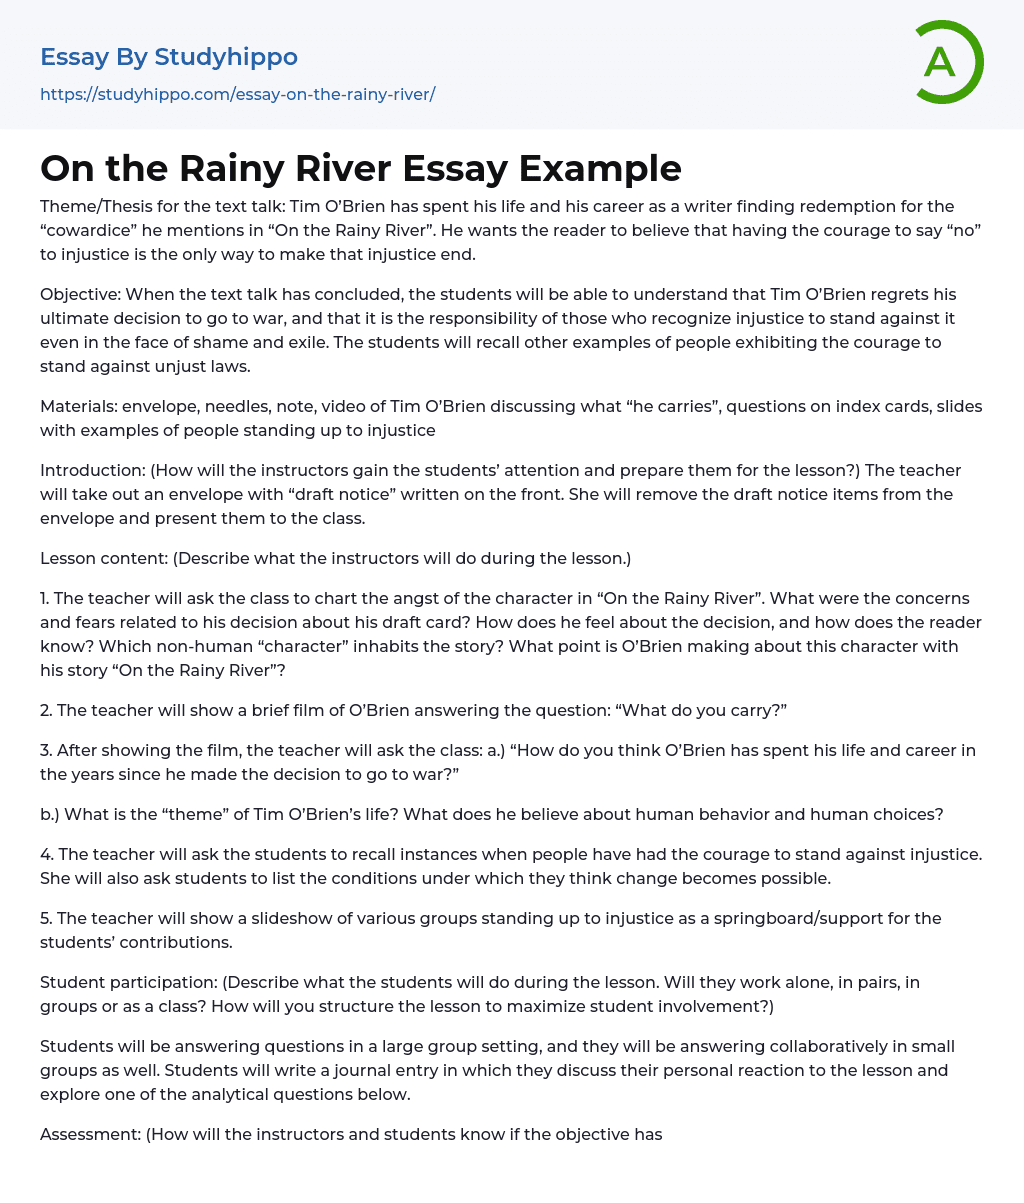 On the Rainy River Essay Example